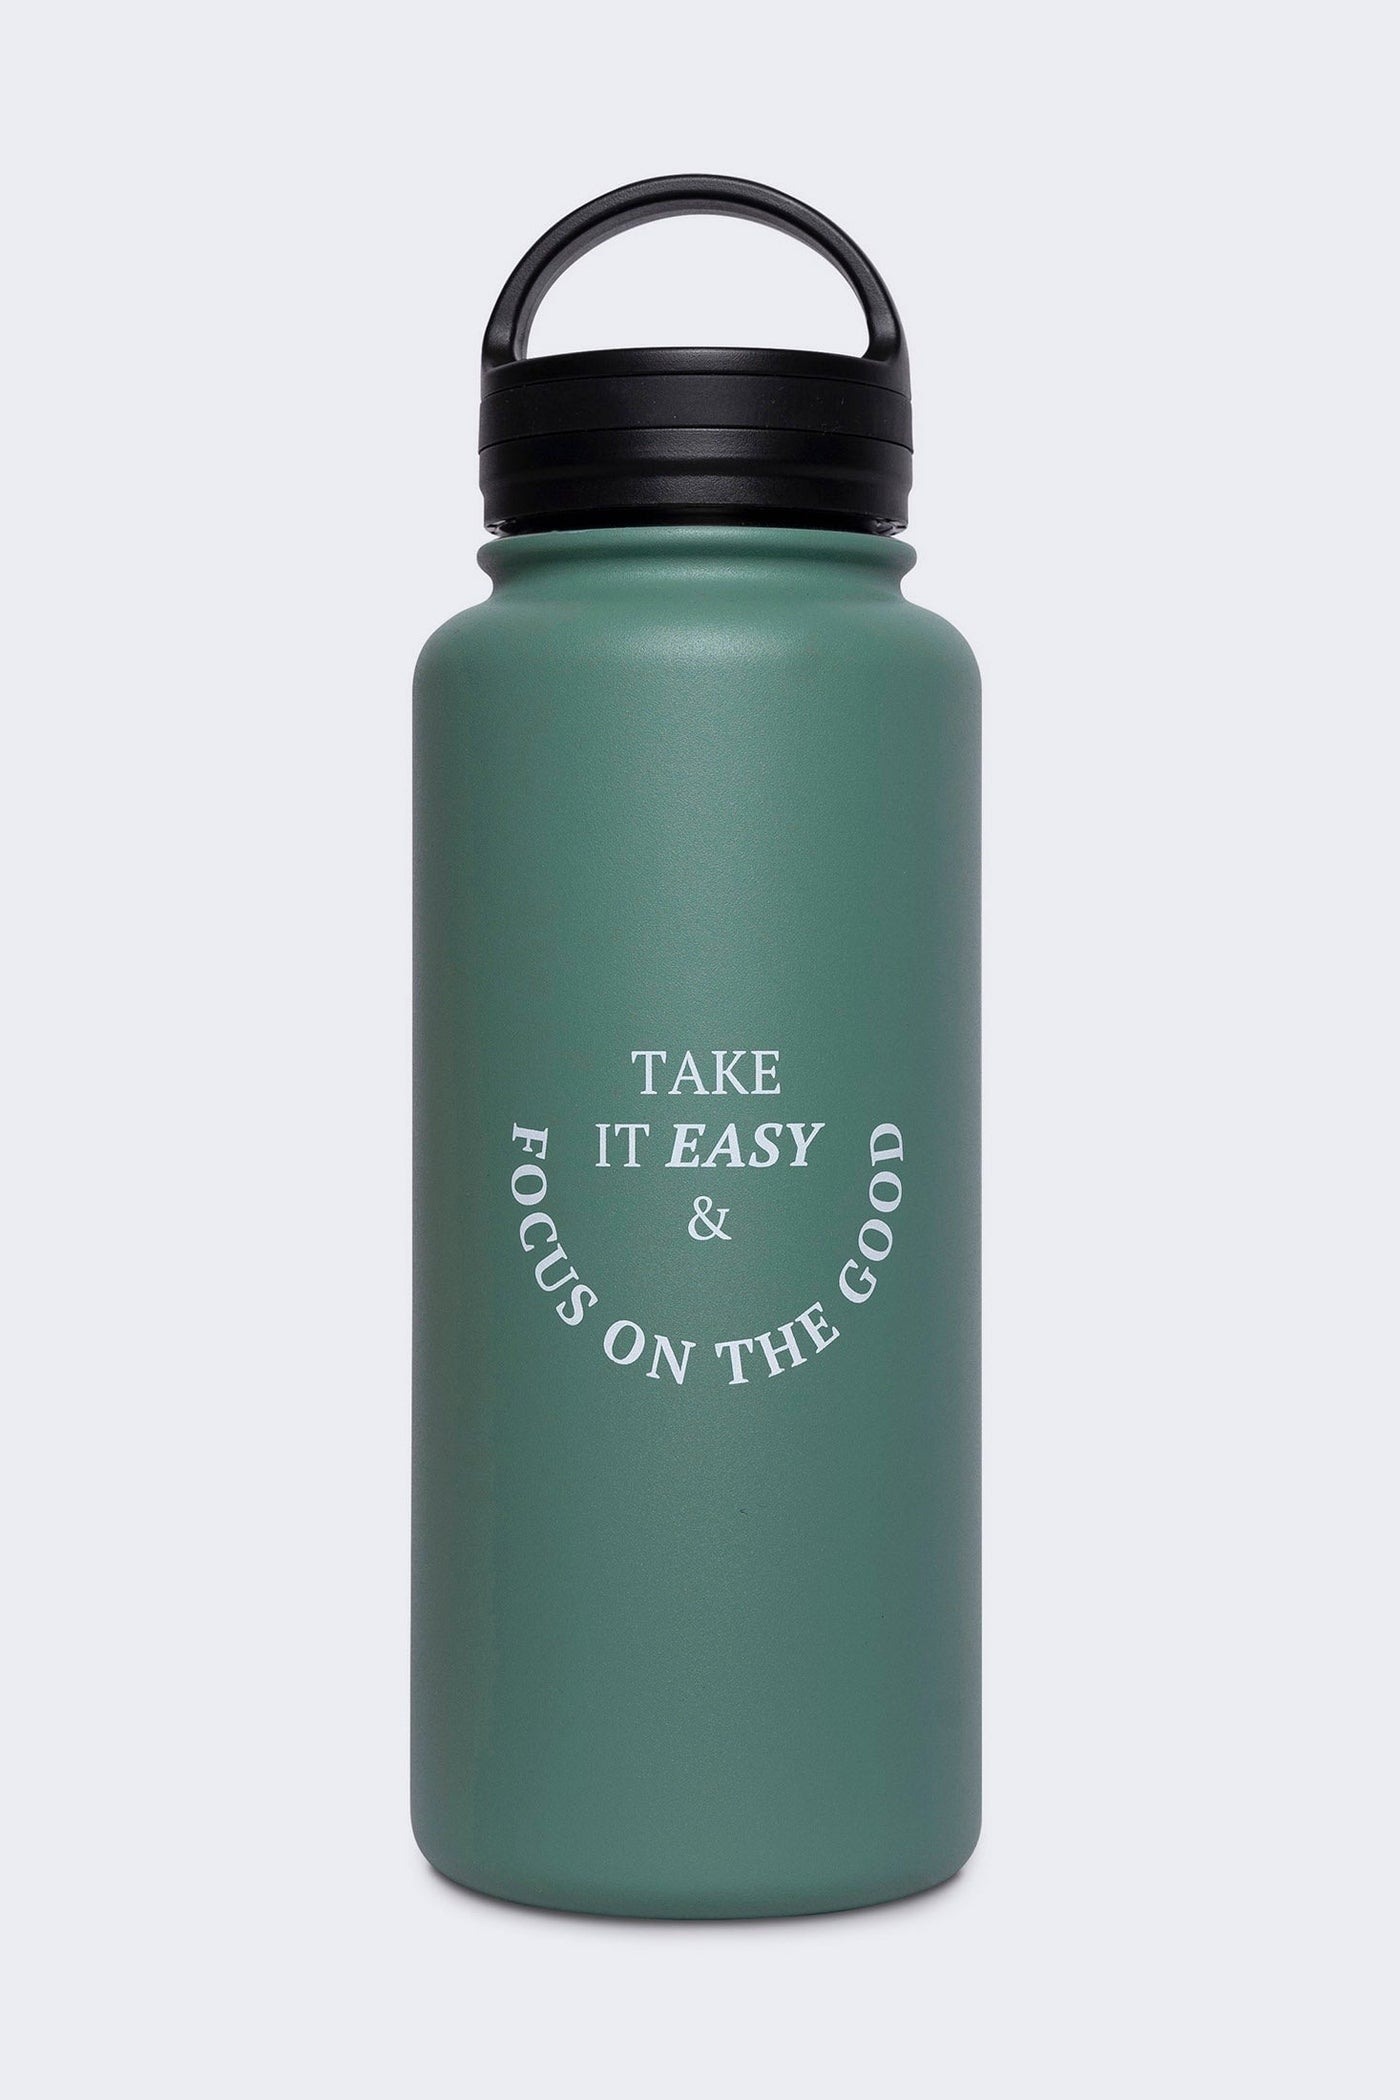 Mint Green Insulated Bottle - 32oz (1L) Insulated Water Bottle Selfawear 